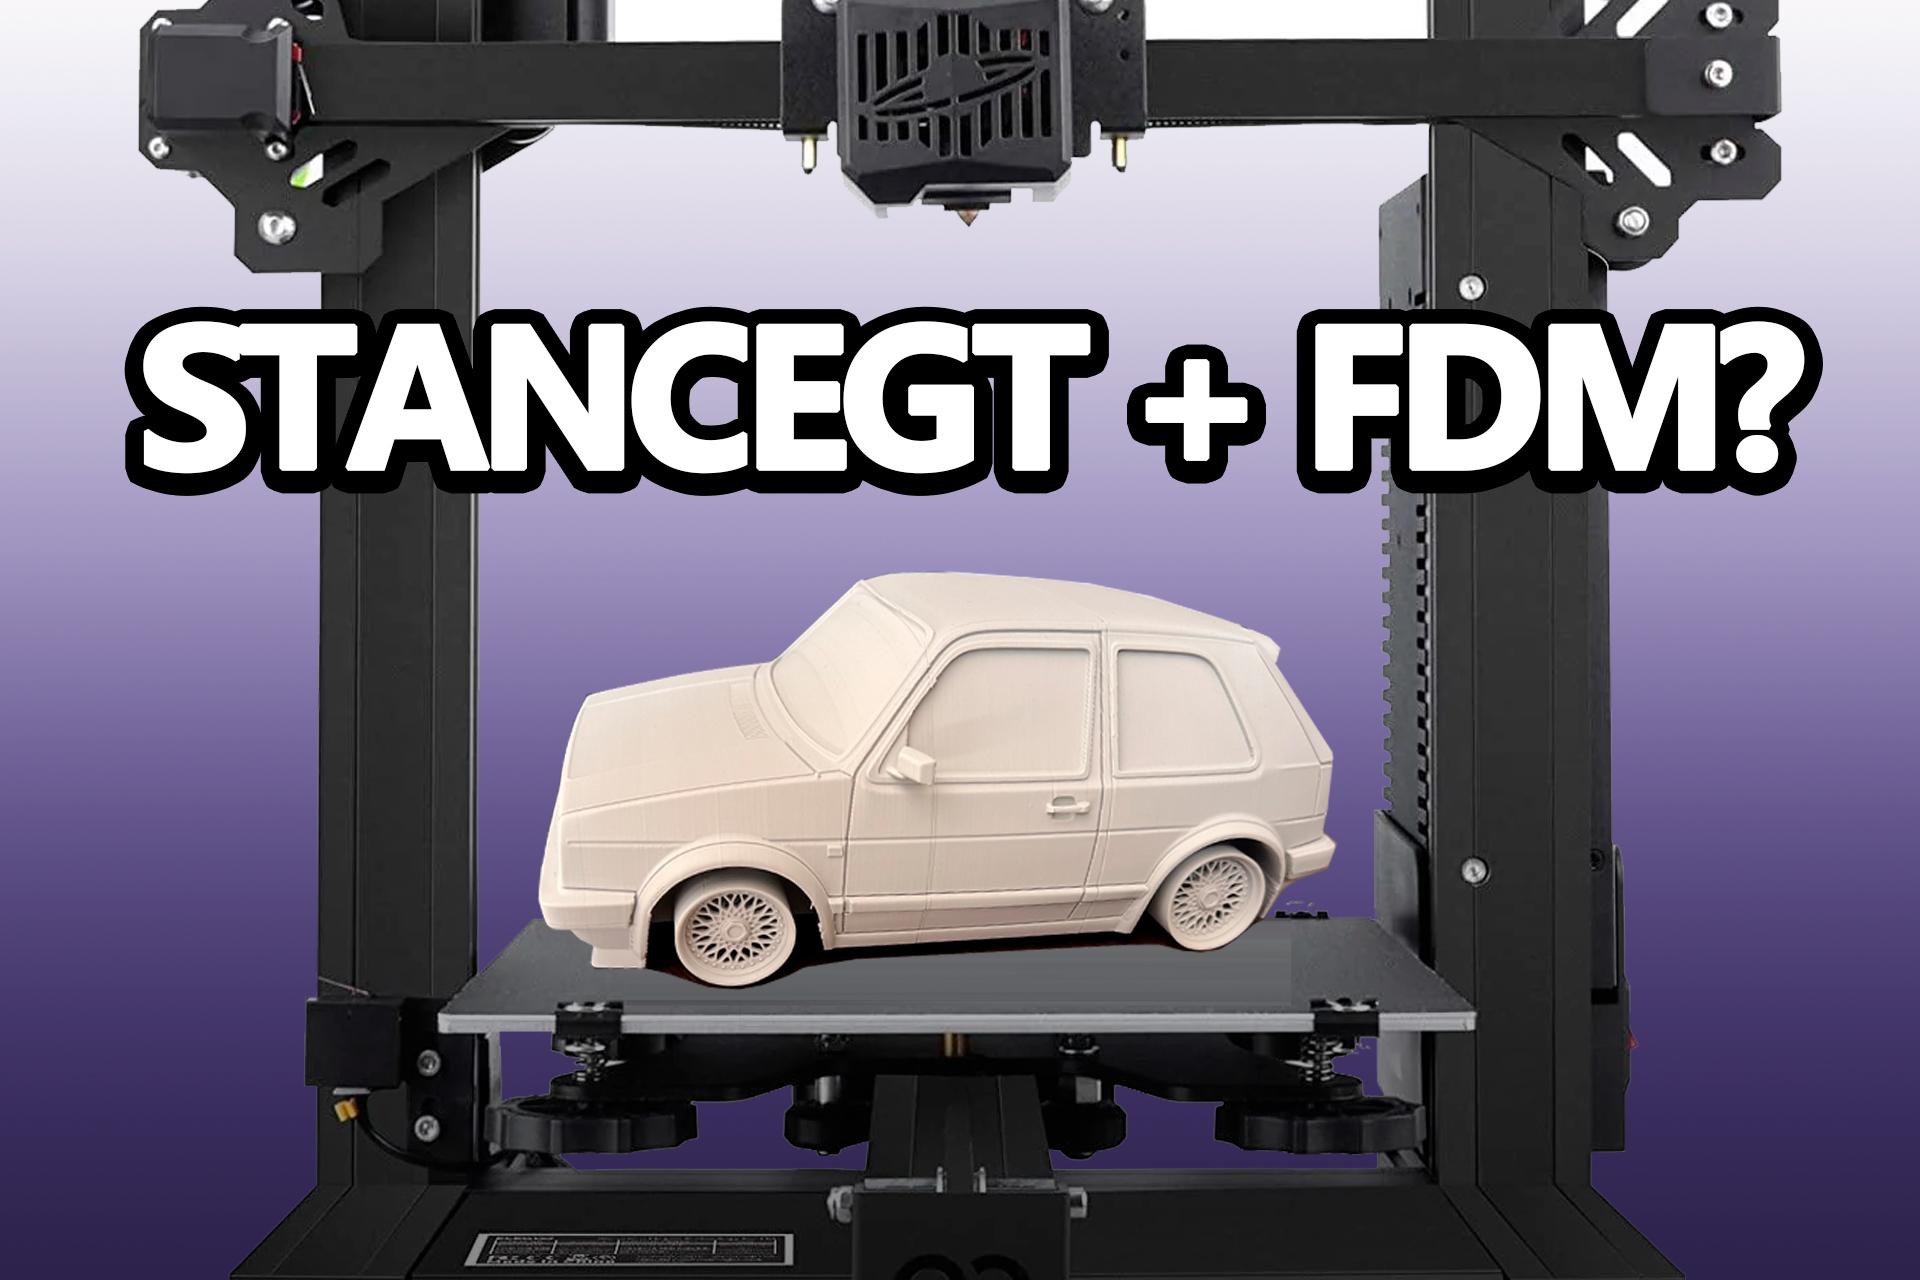 Print cars in 3D? StanceGT + FDM, it's possible?